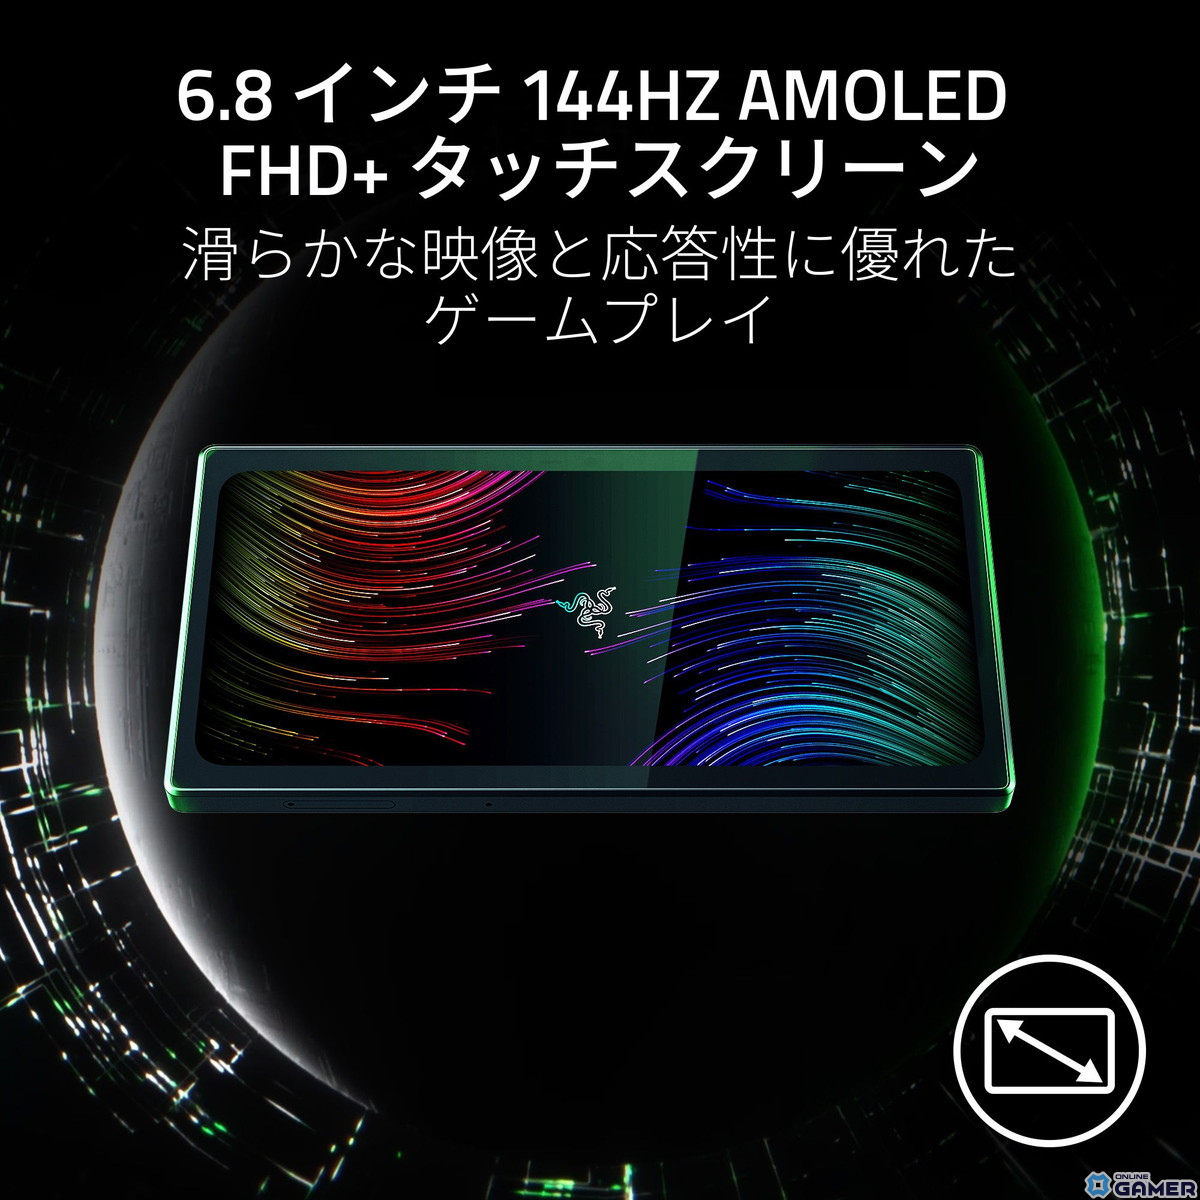 Snapdragon G3x Gen 1搭載のハイスペックAndroid携帯型ゲーム端末「Razer Edge Gaming Tablet Wi-Fi モデル」の予約受付を開始！の画像